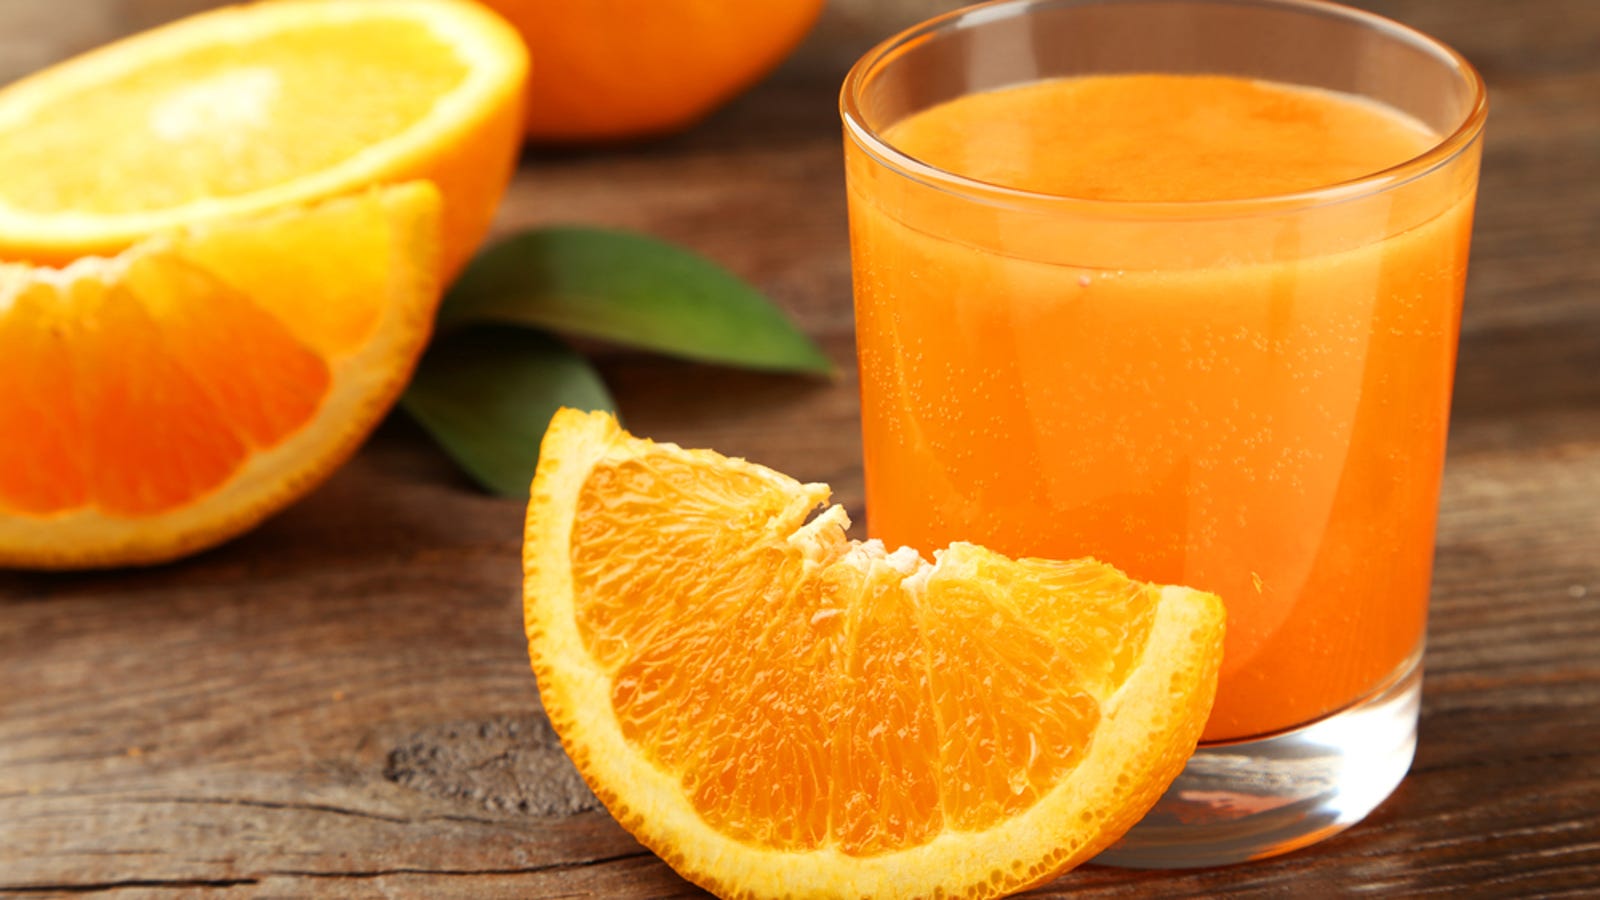 Why Does Orange Juice Taste Terrible After Brushing Your Teeth